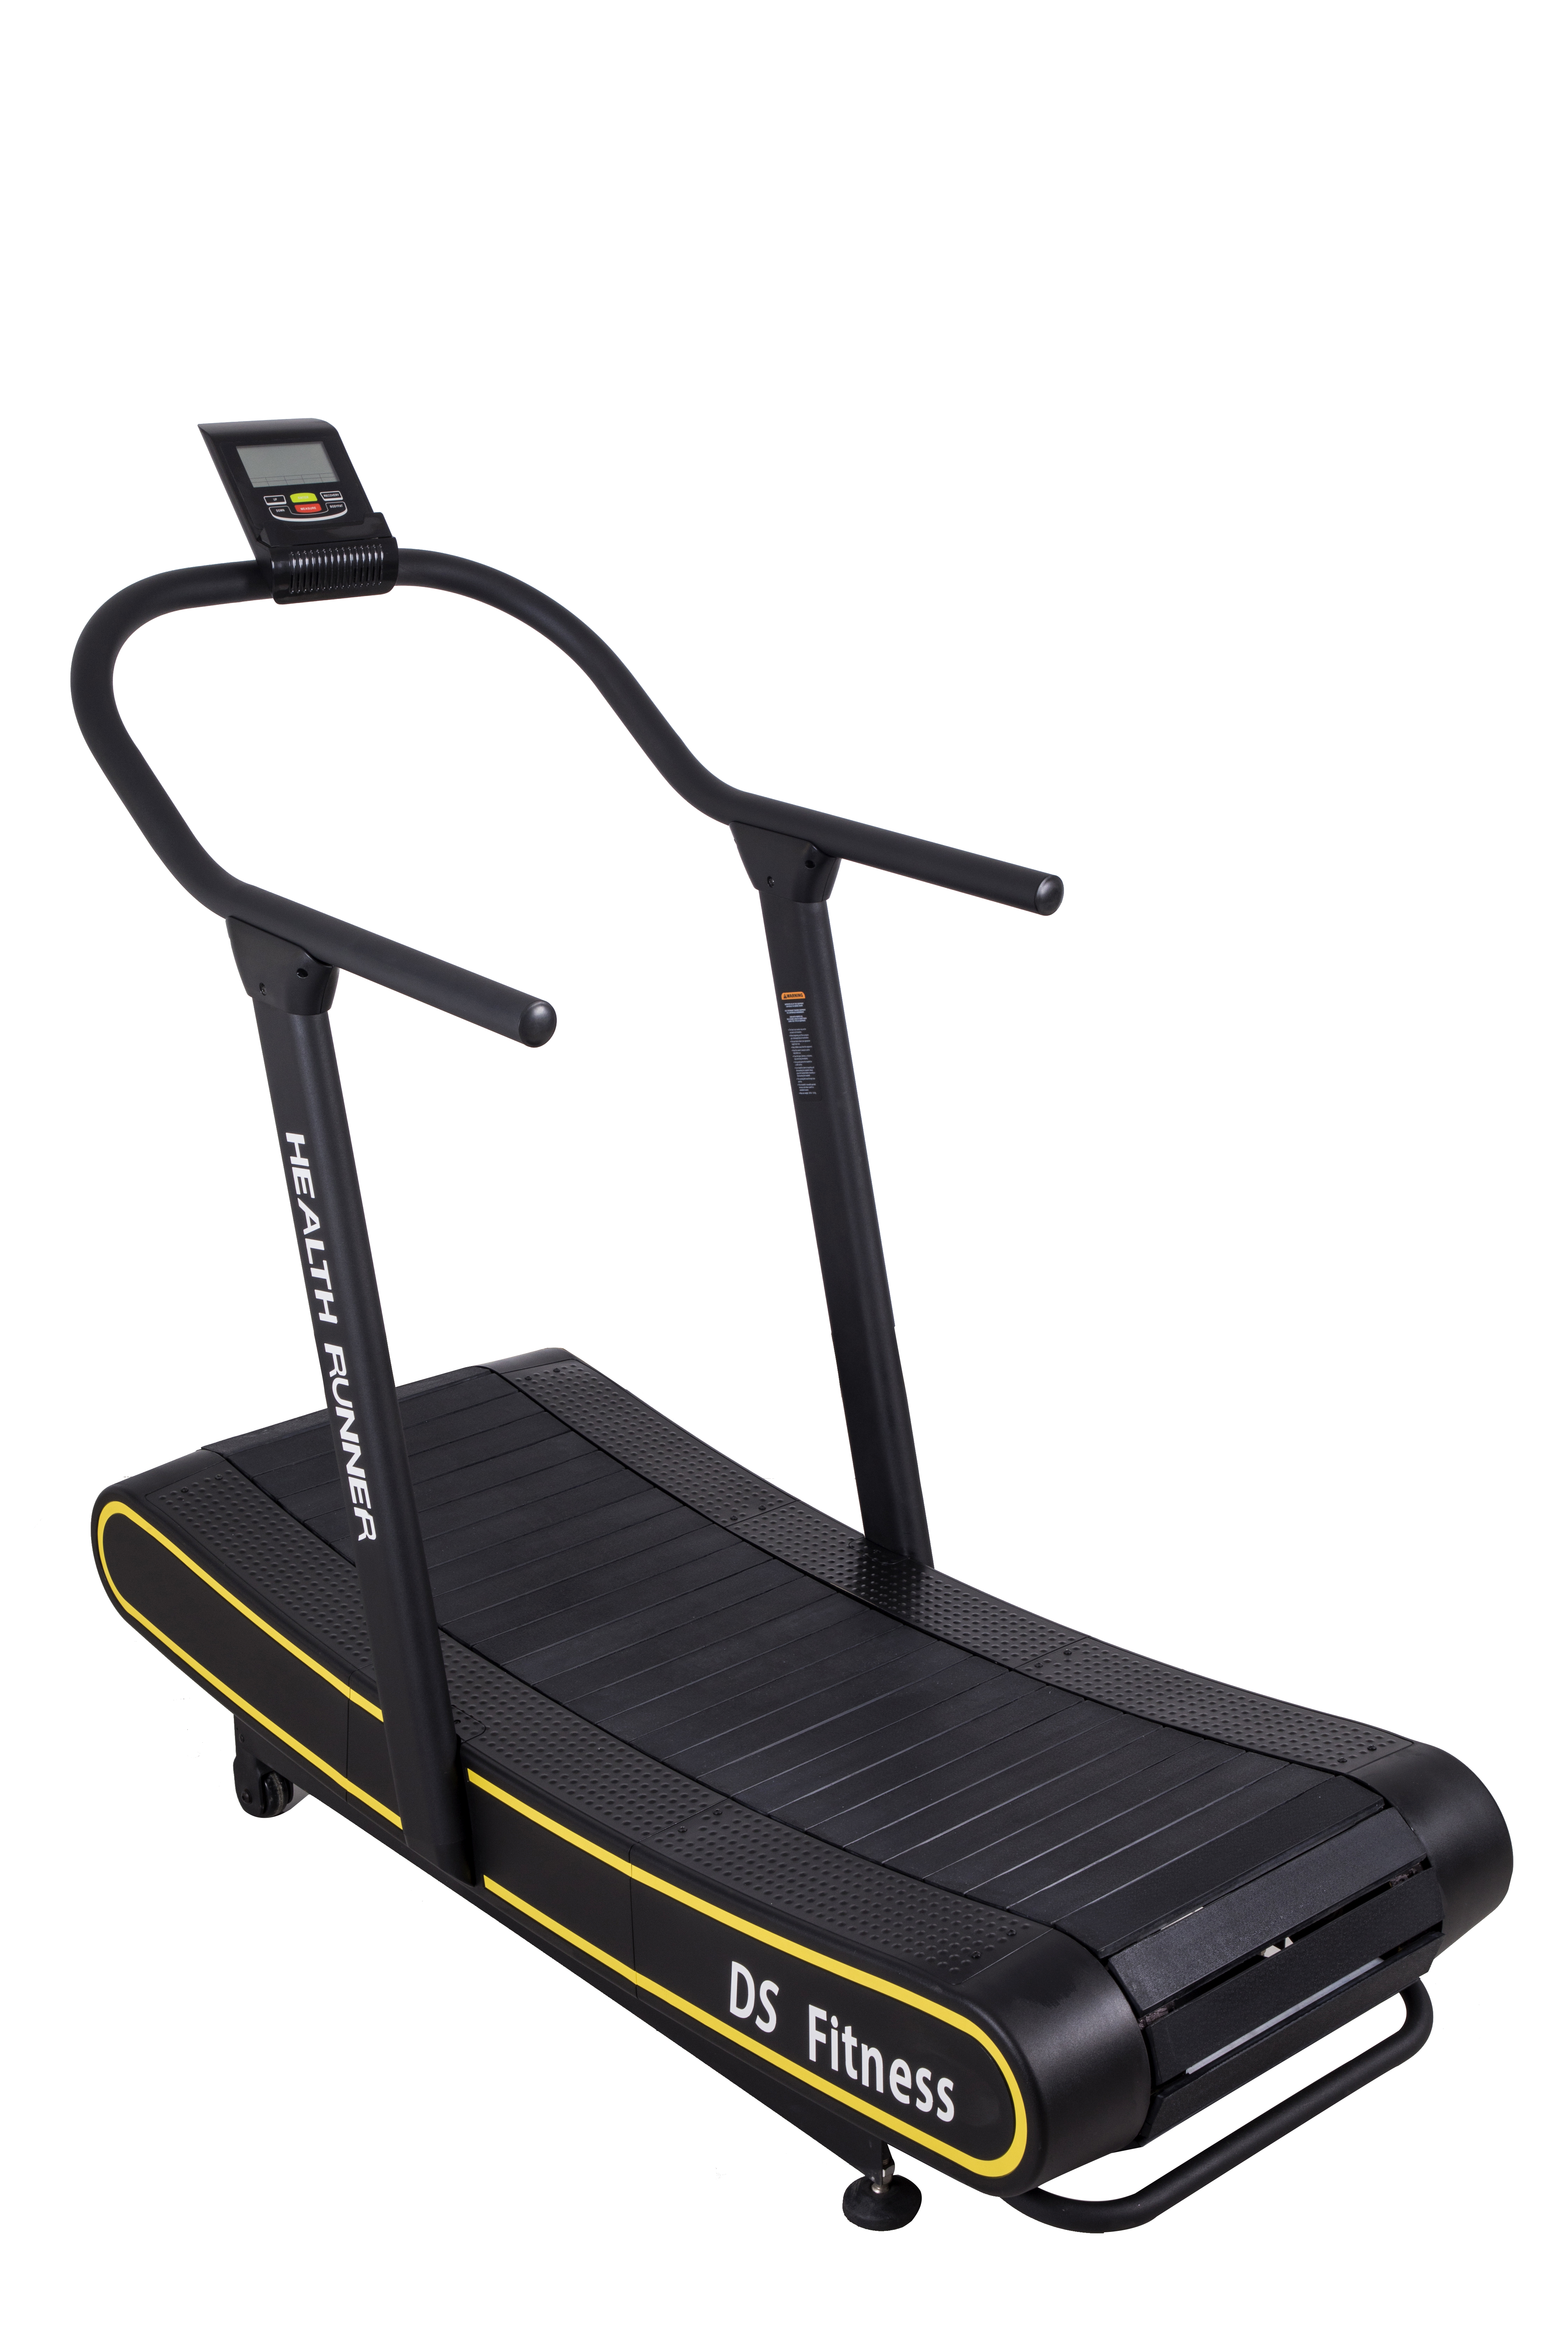 Motorless Quiet Natural Running Commercial Curved Treadmill